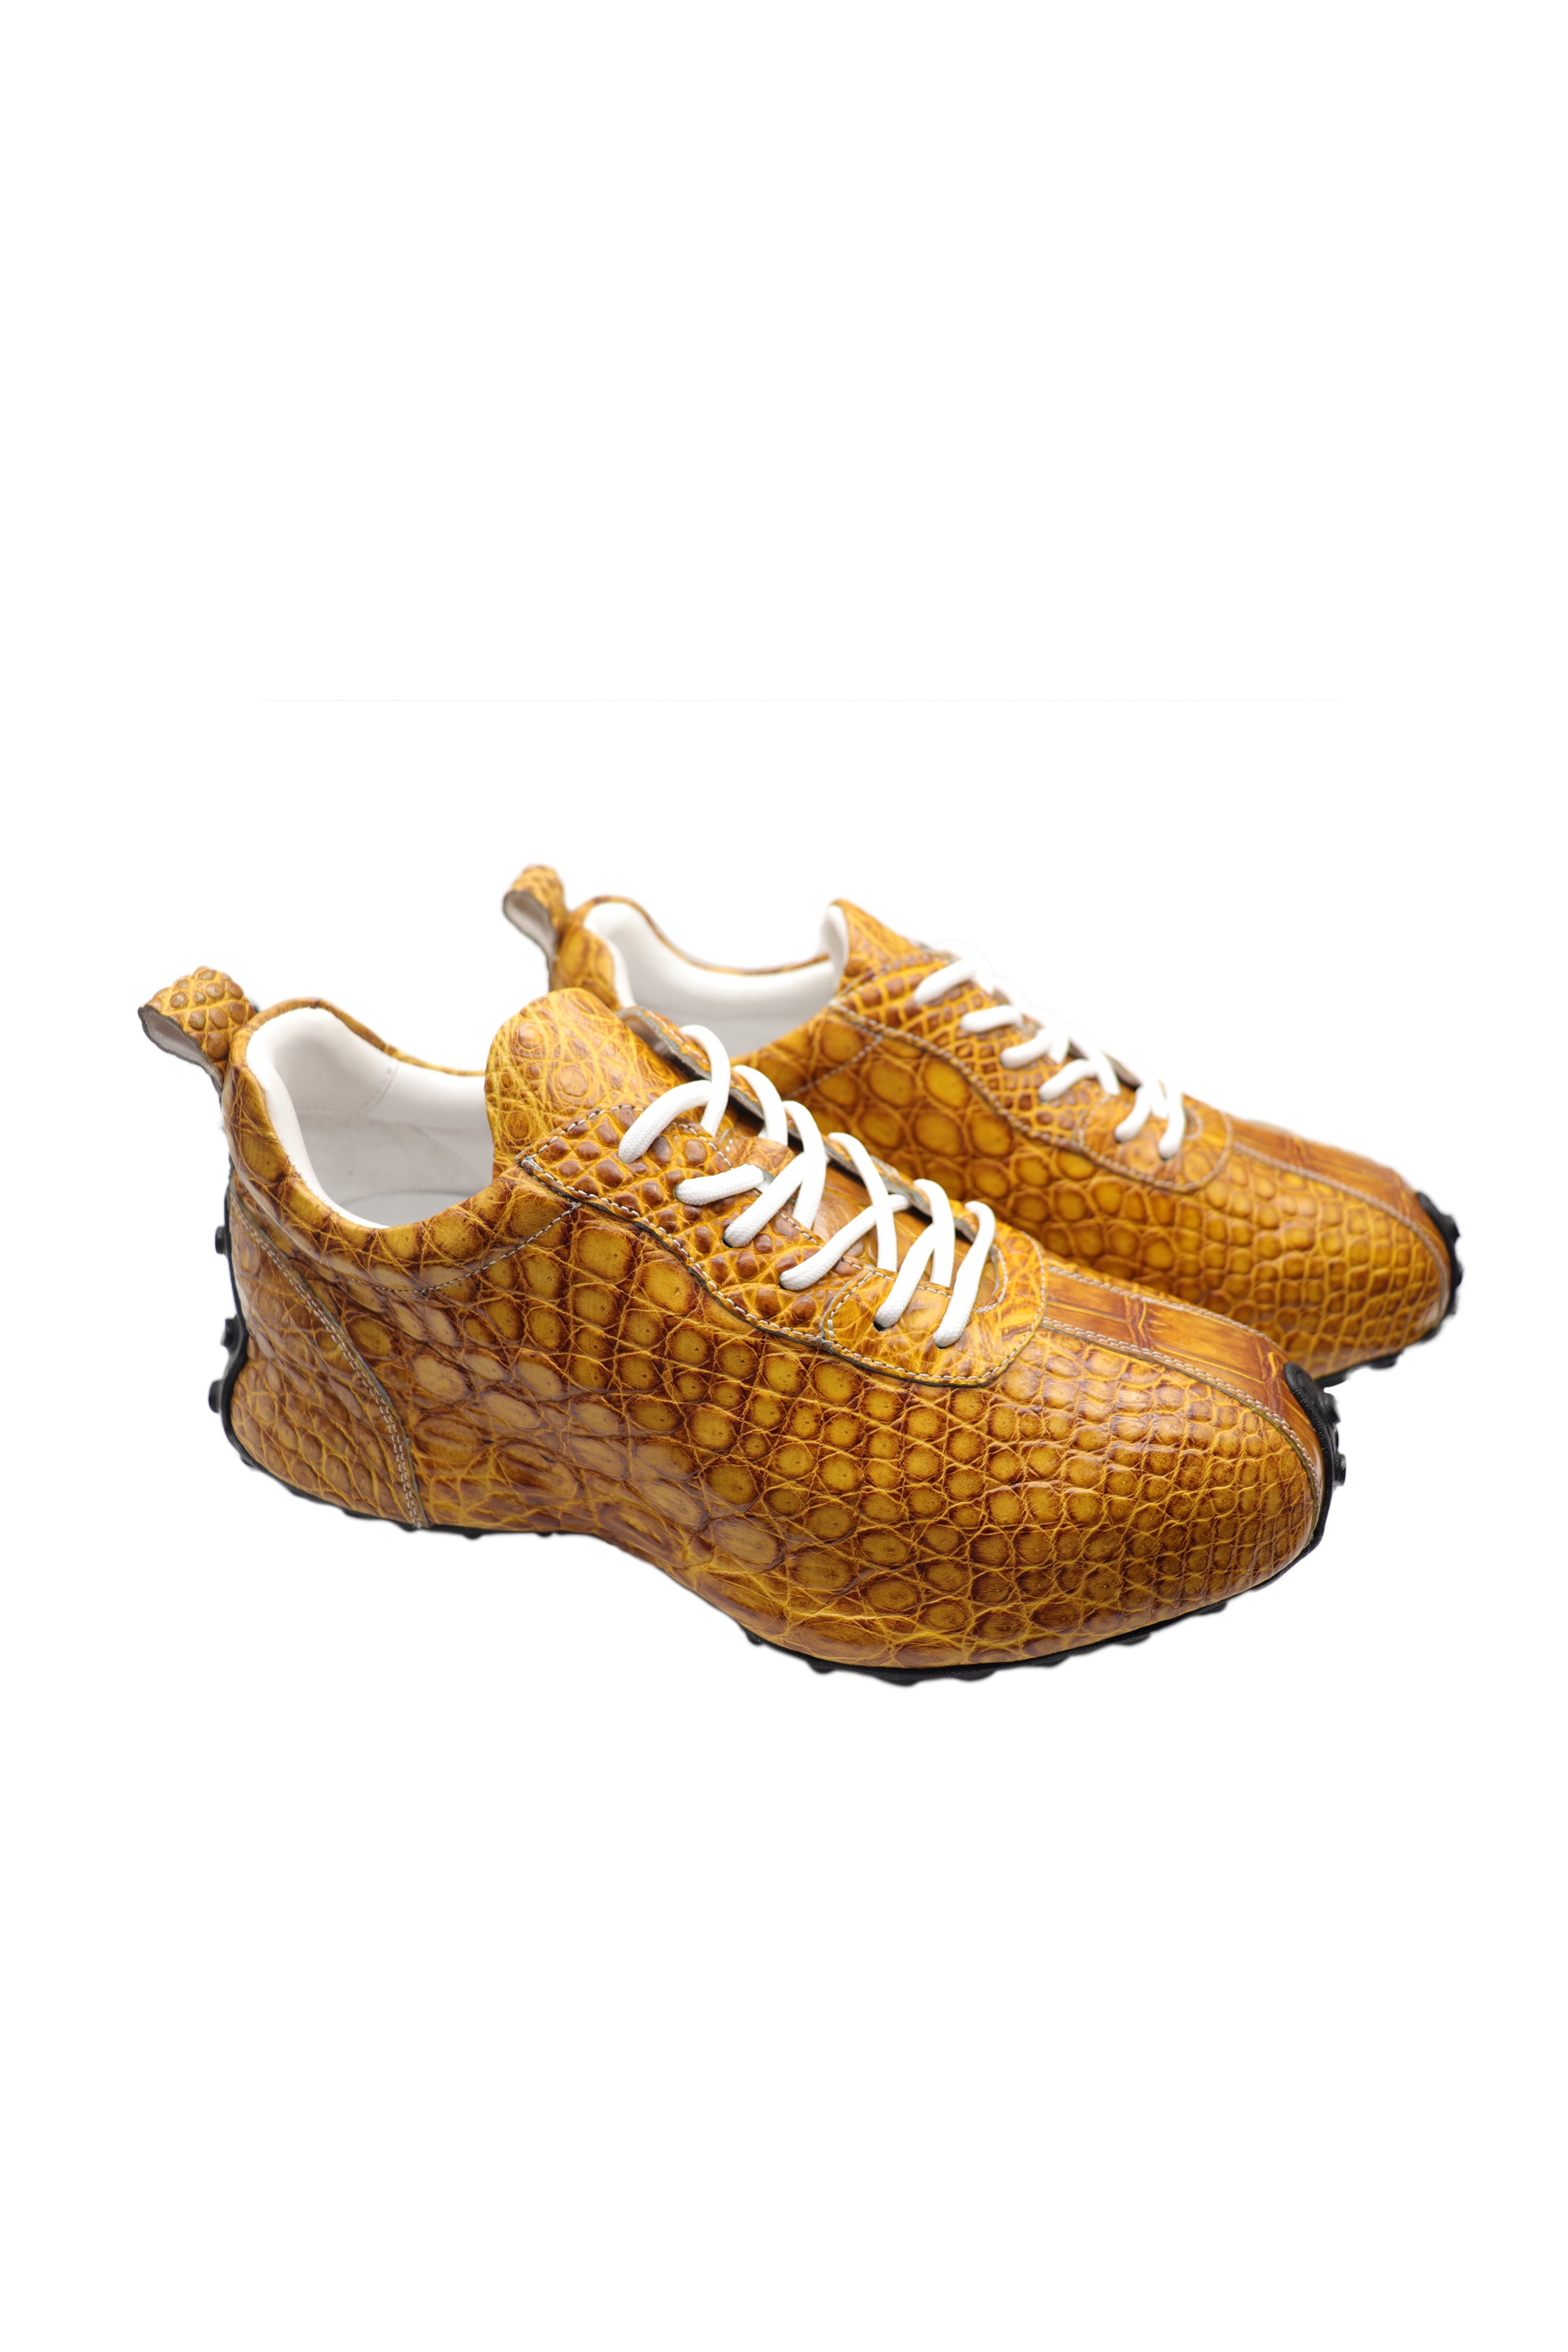 Earthy Yellow Crocodile Sneakers for Men's |  Crocodile Sneaker Shoes Yellow